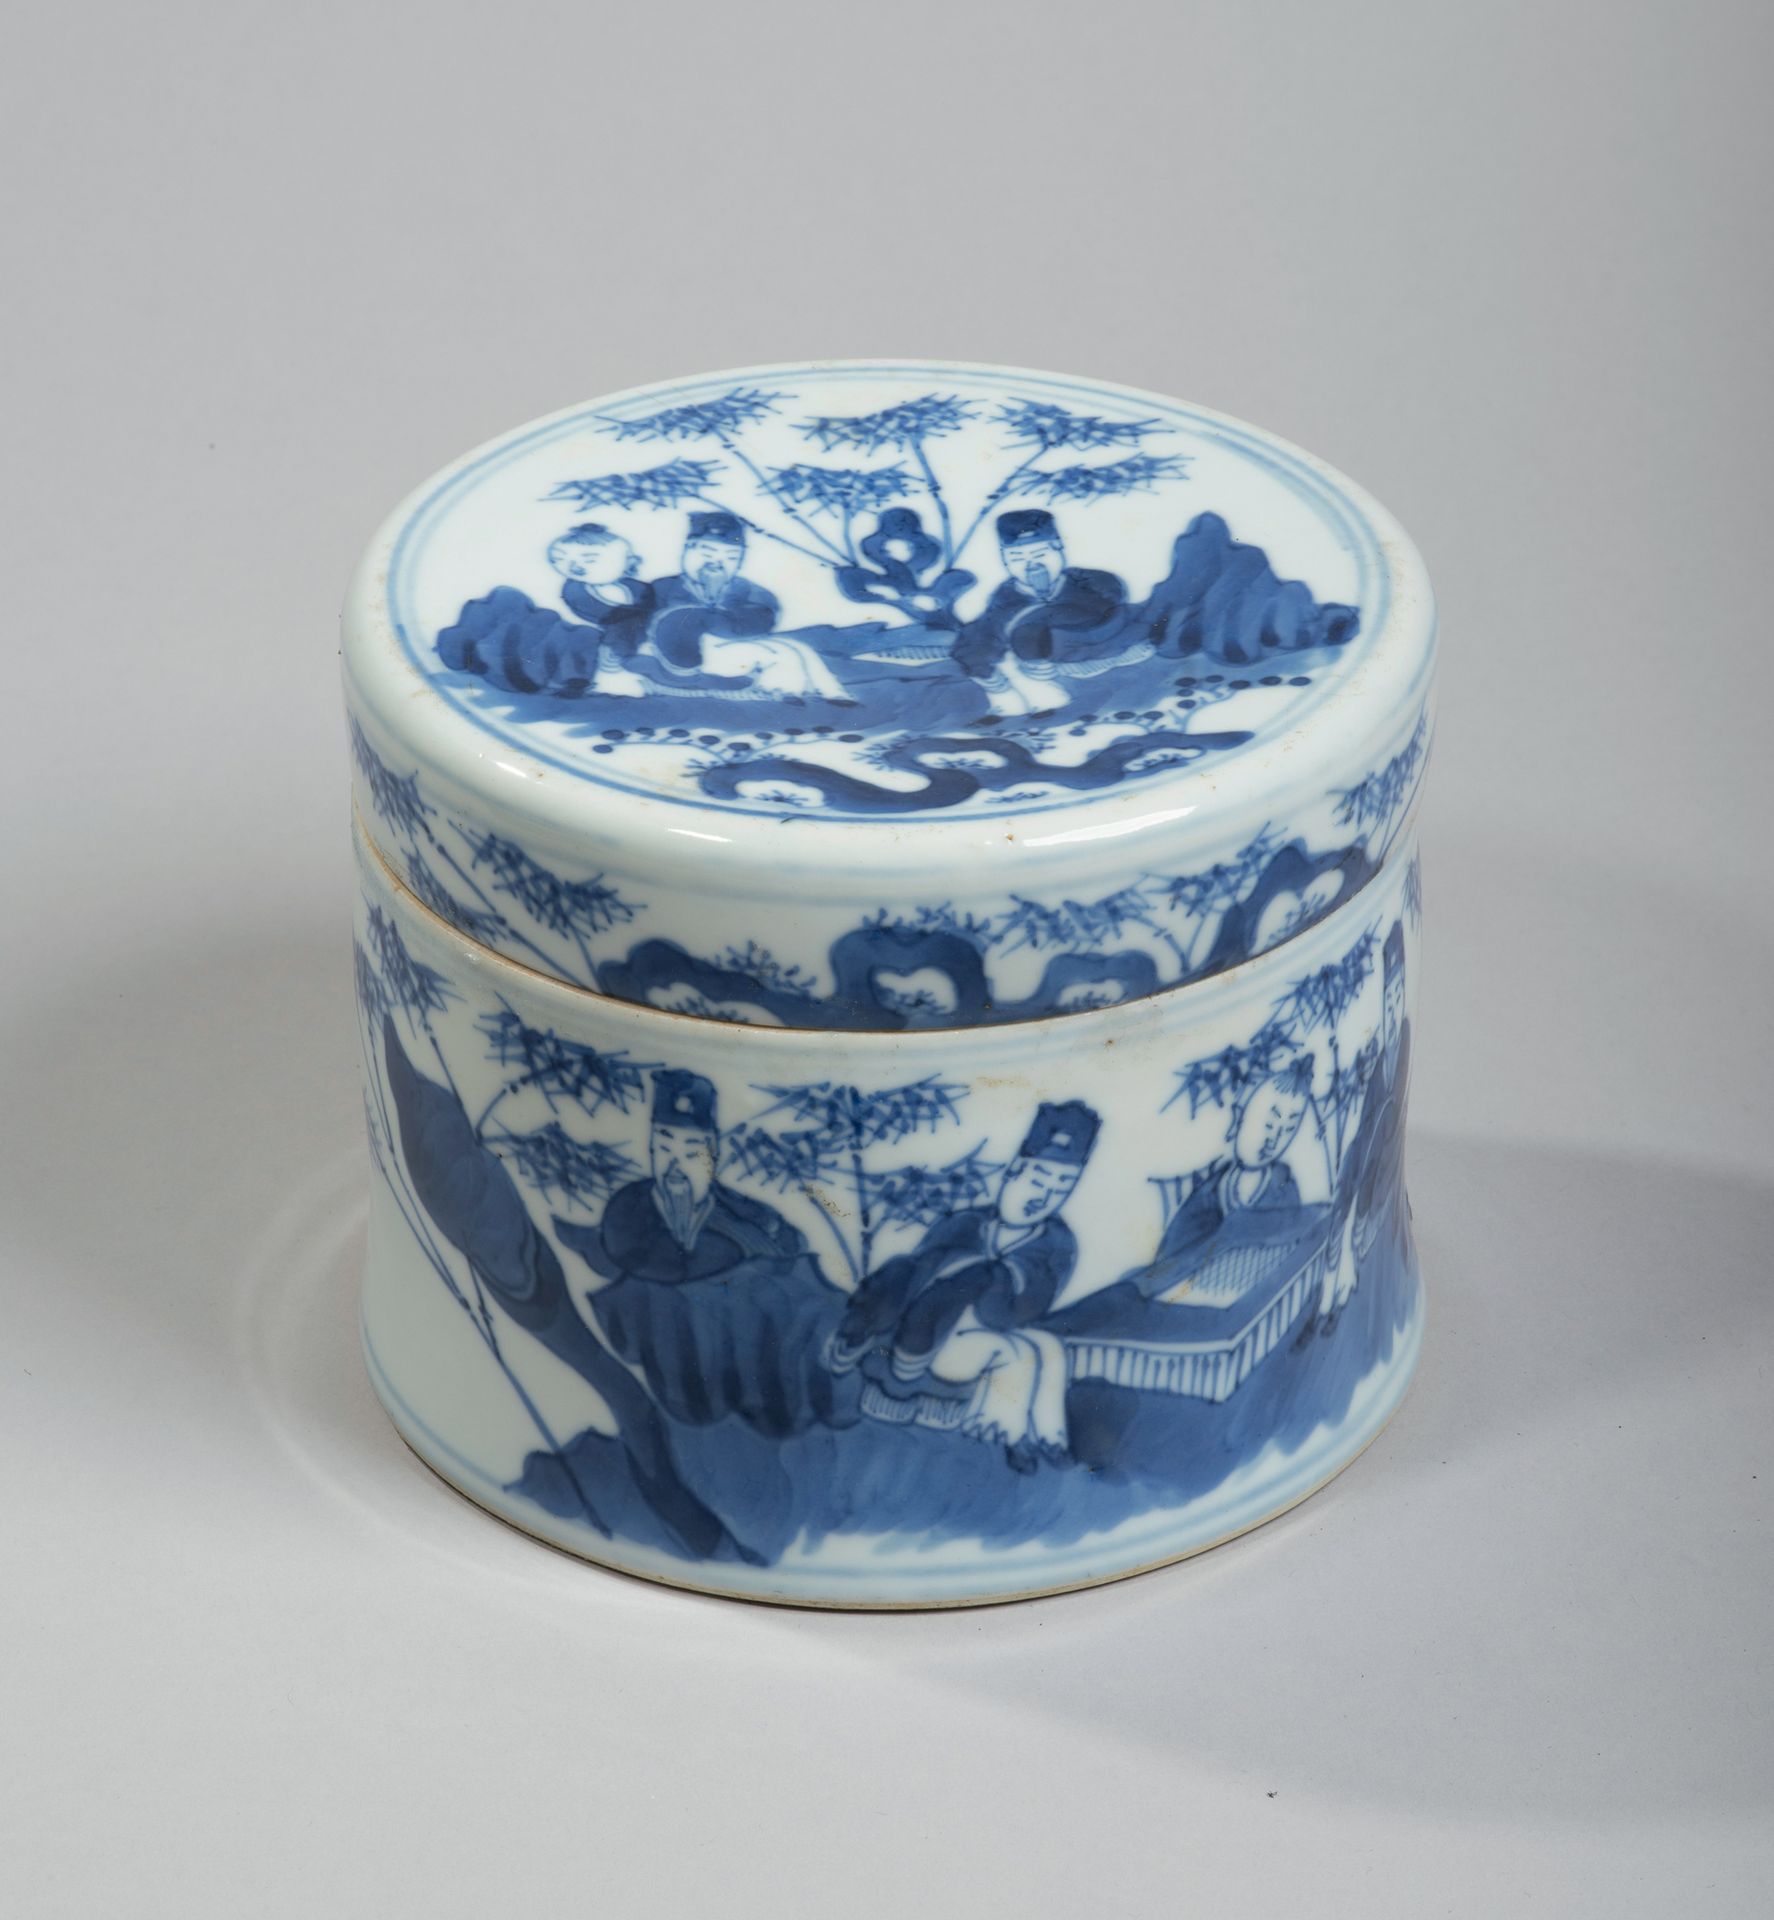 VIETNAM, Hue - XIXe siècle 
一个圆形的瓷盒，用蓝色的釉下彩装饰着竹子中的字母，正在下棋。直径14厘米。